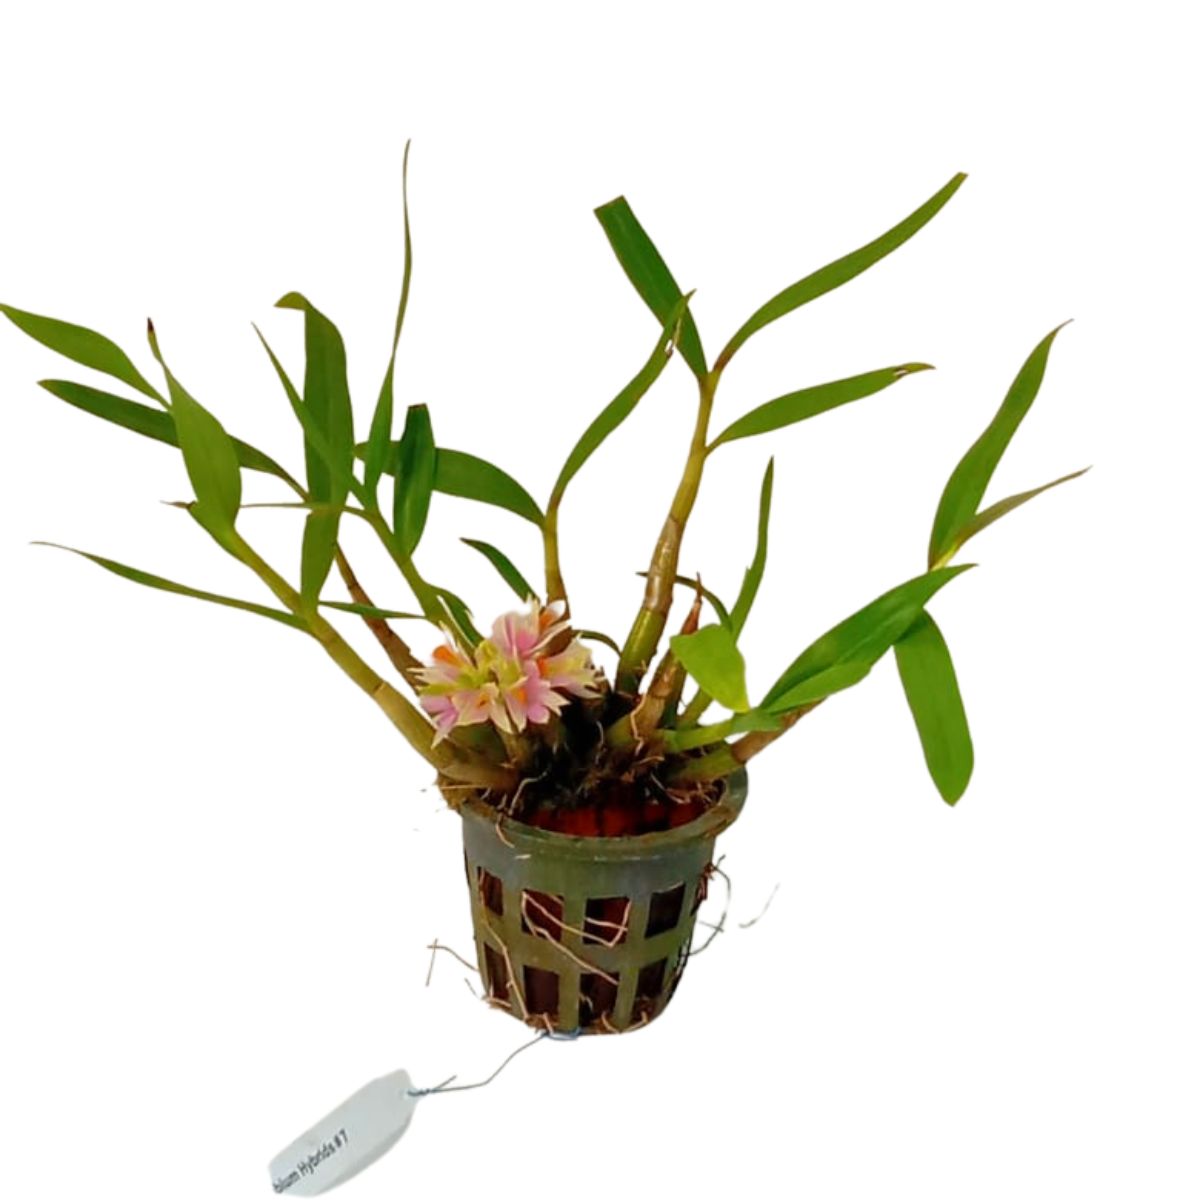 Dendrobium Sakurako orchid - Mature blooming-sized plant with elegant flowers - Buy Online